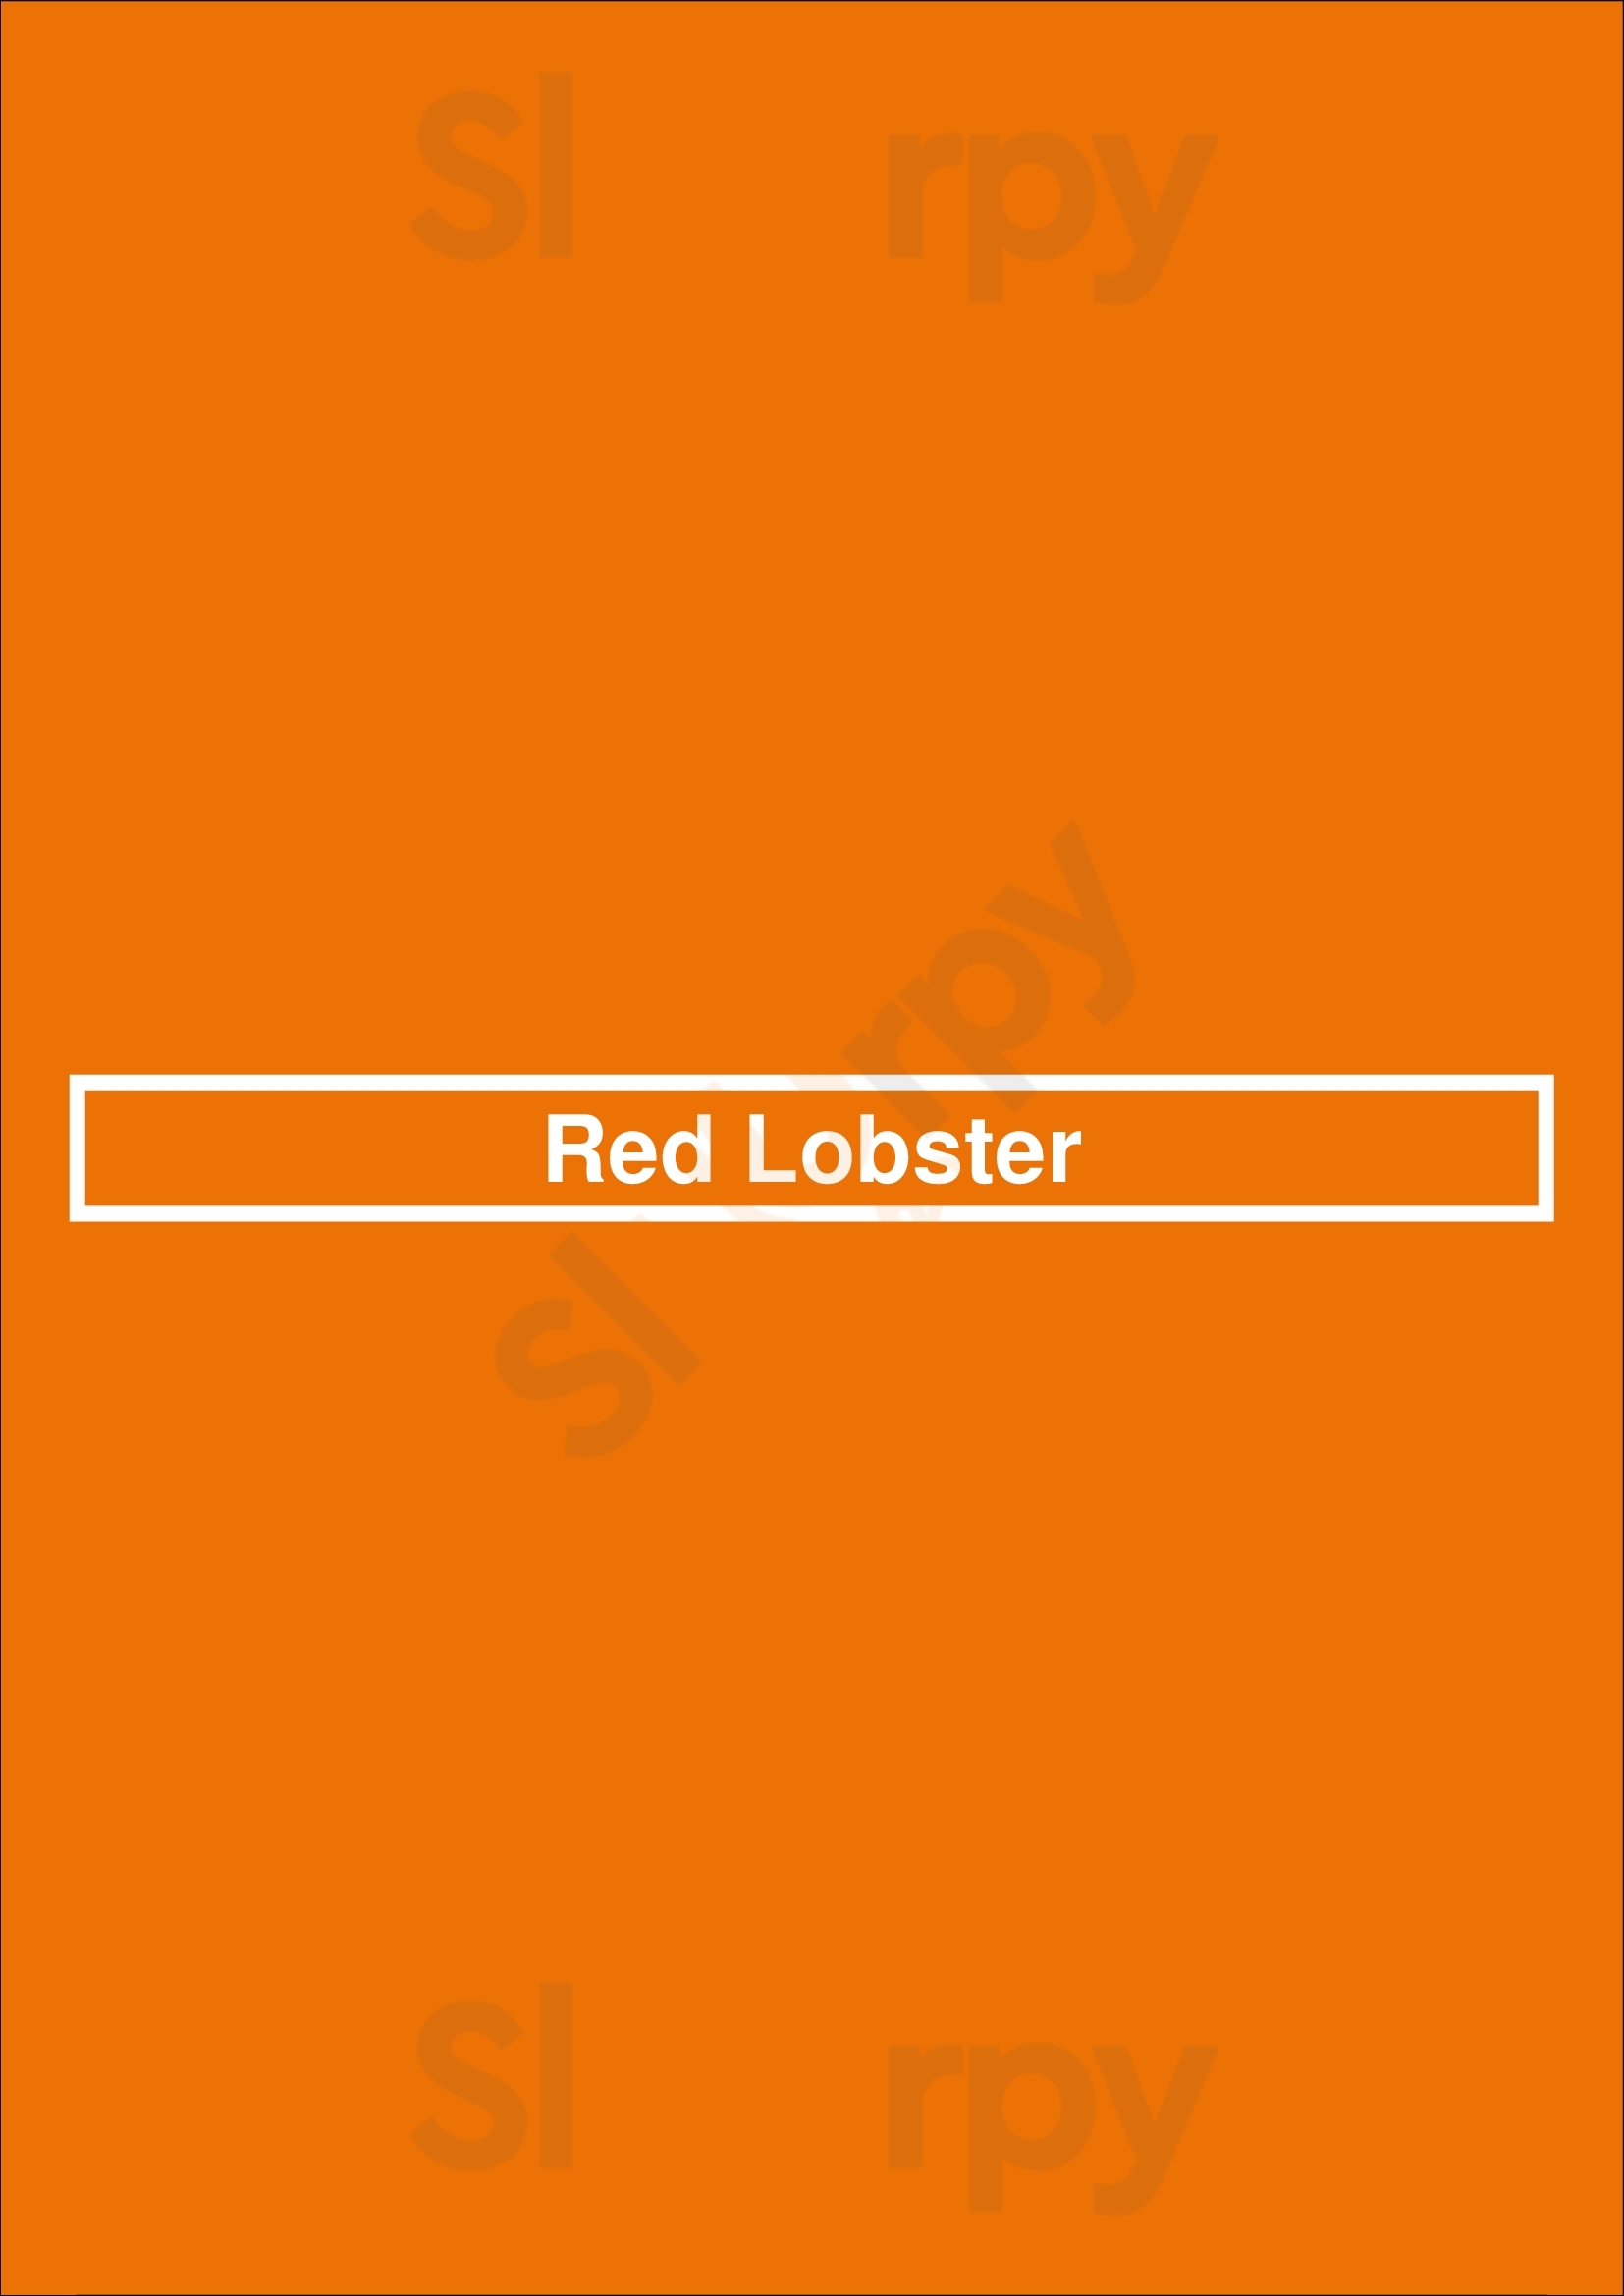 Red Lobster Greensboro Menu - 1